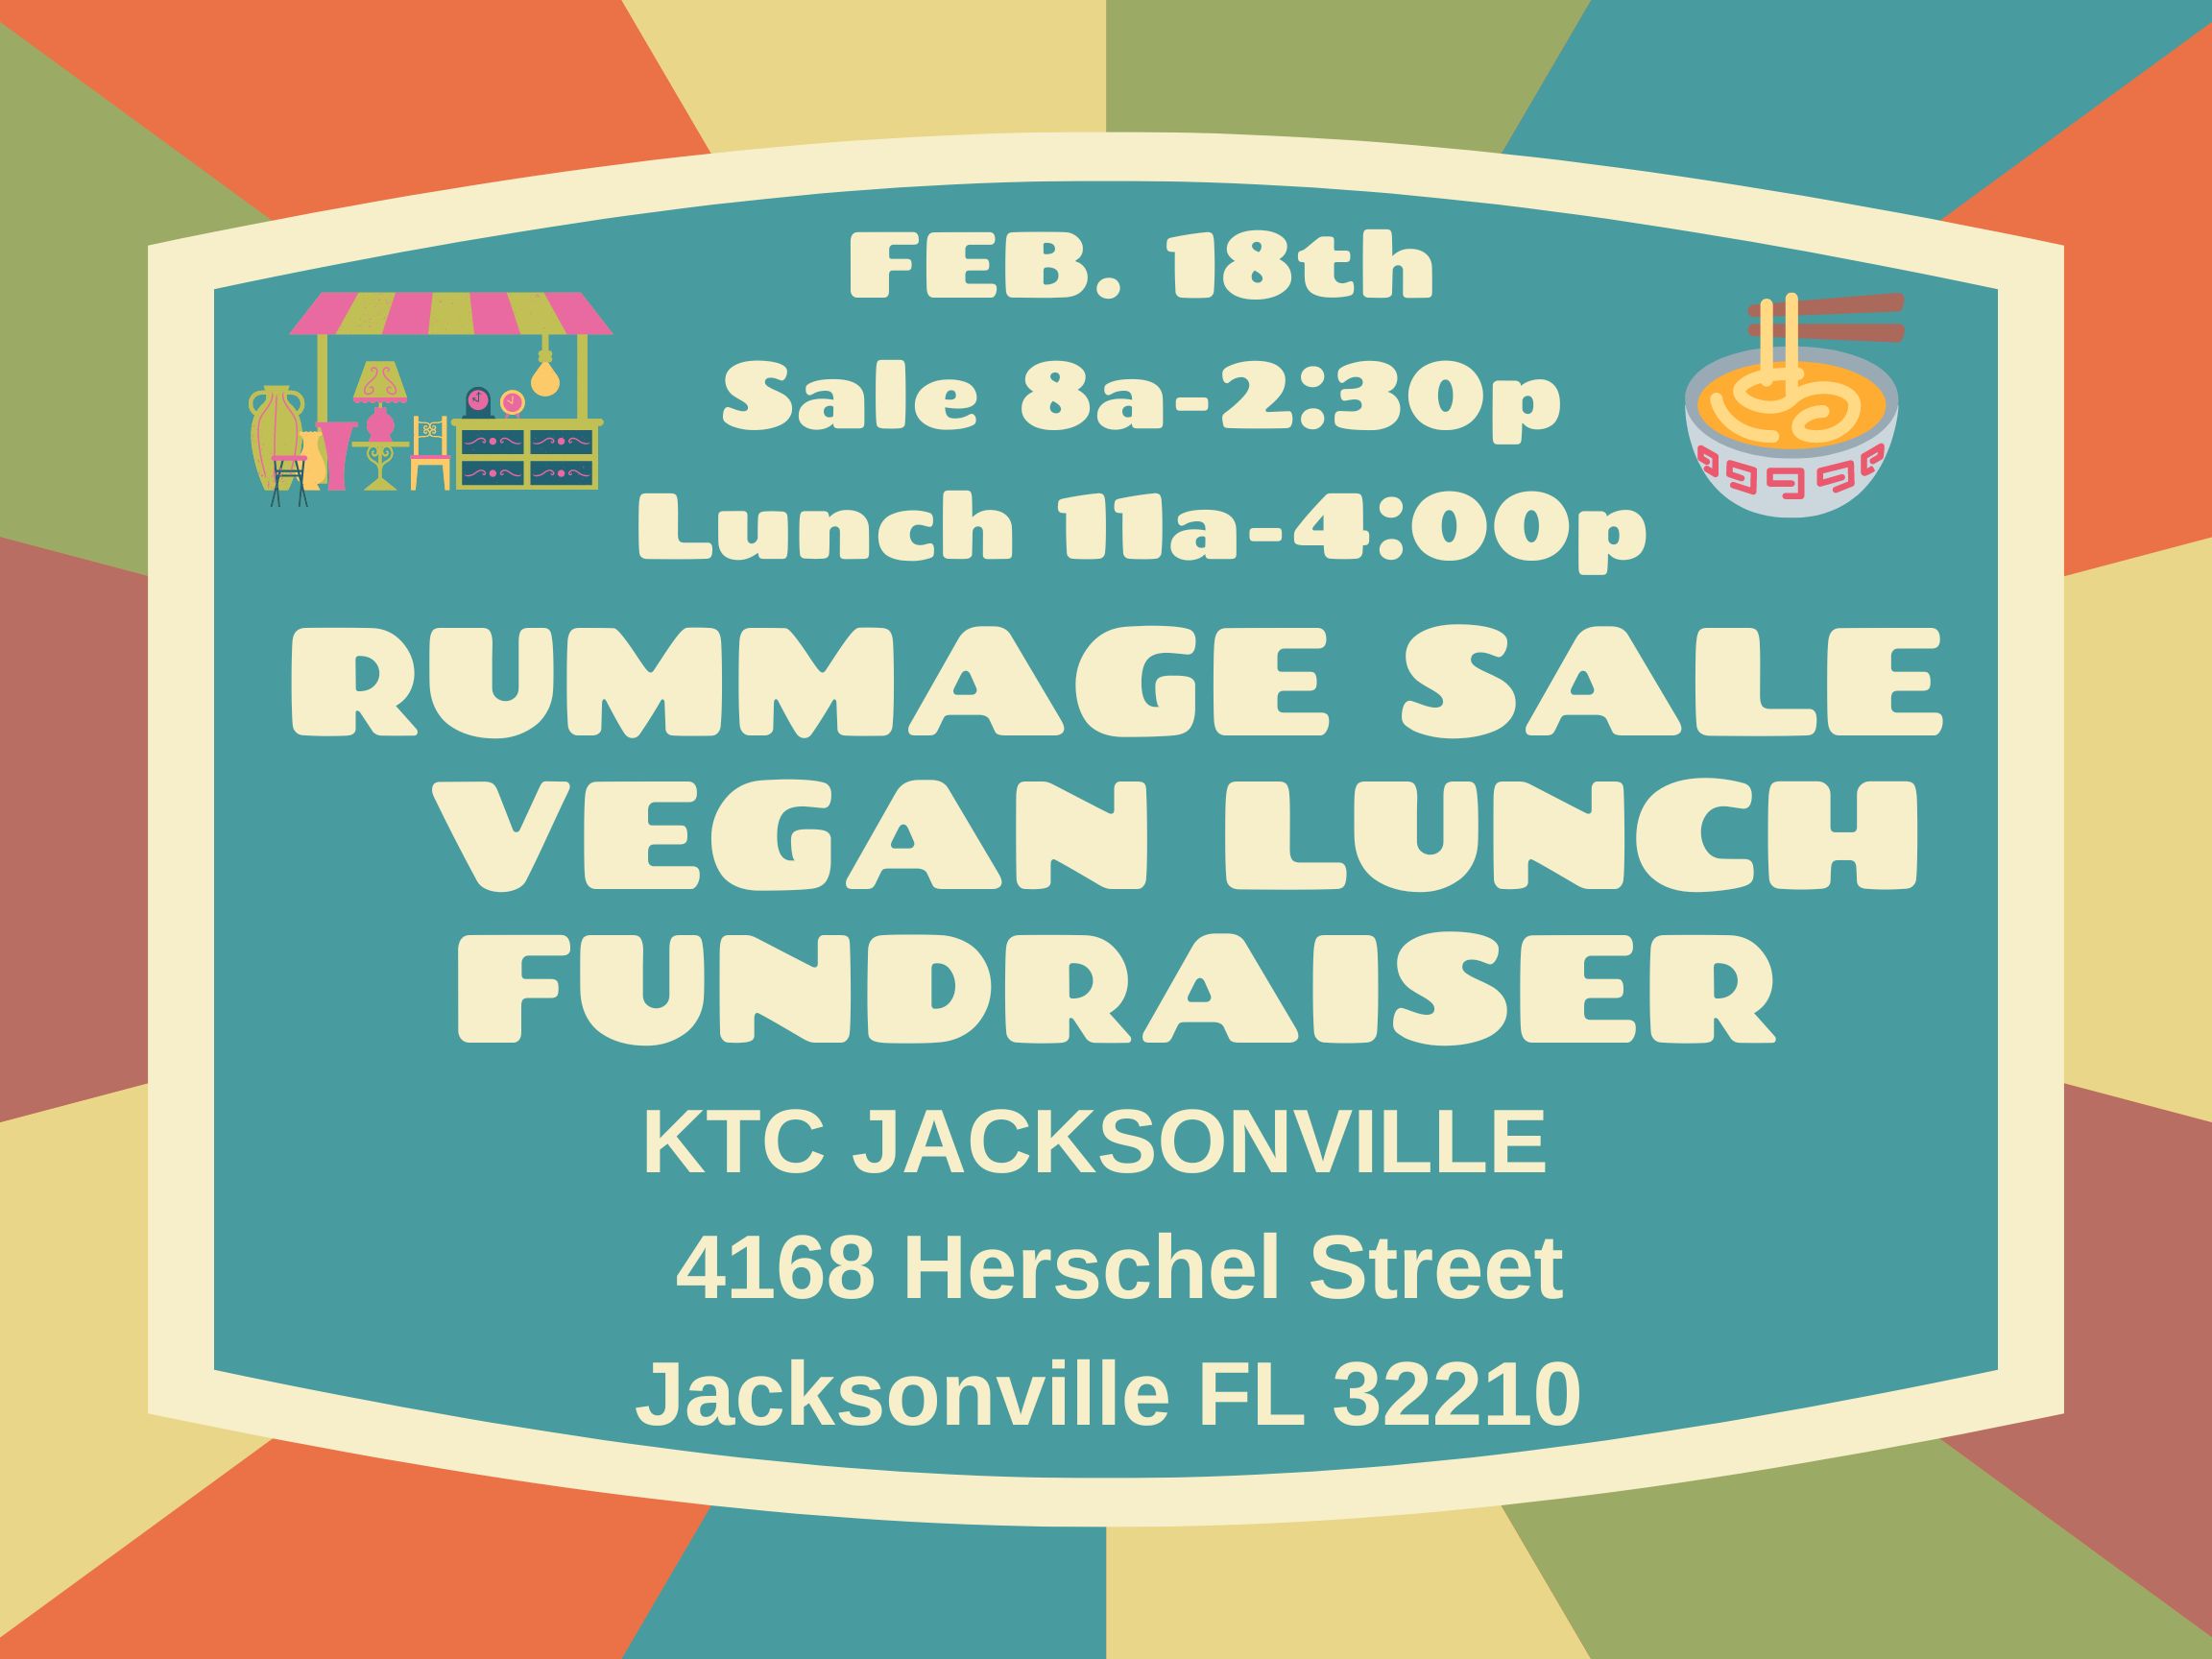 Rummage Sale & Vegan Lunch Fundraiser for KTC Jacksonville